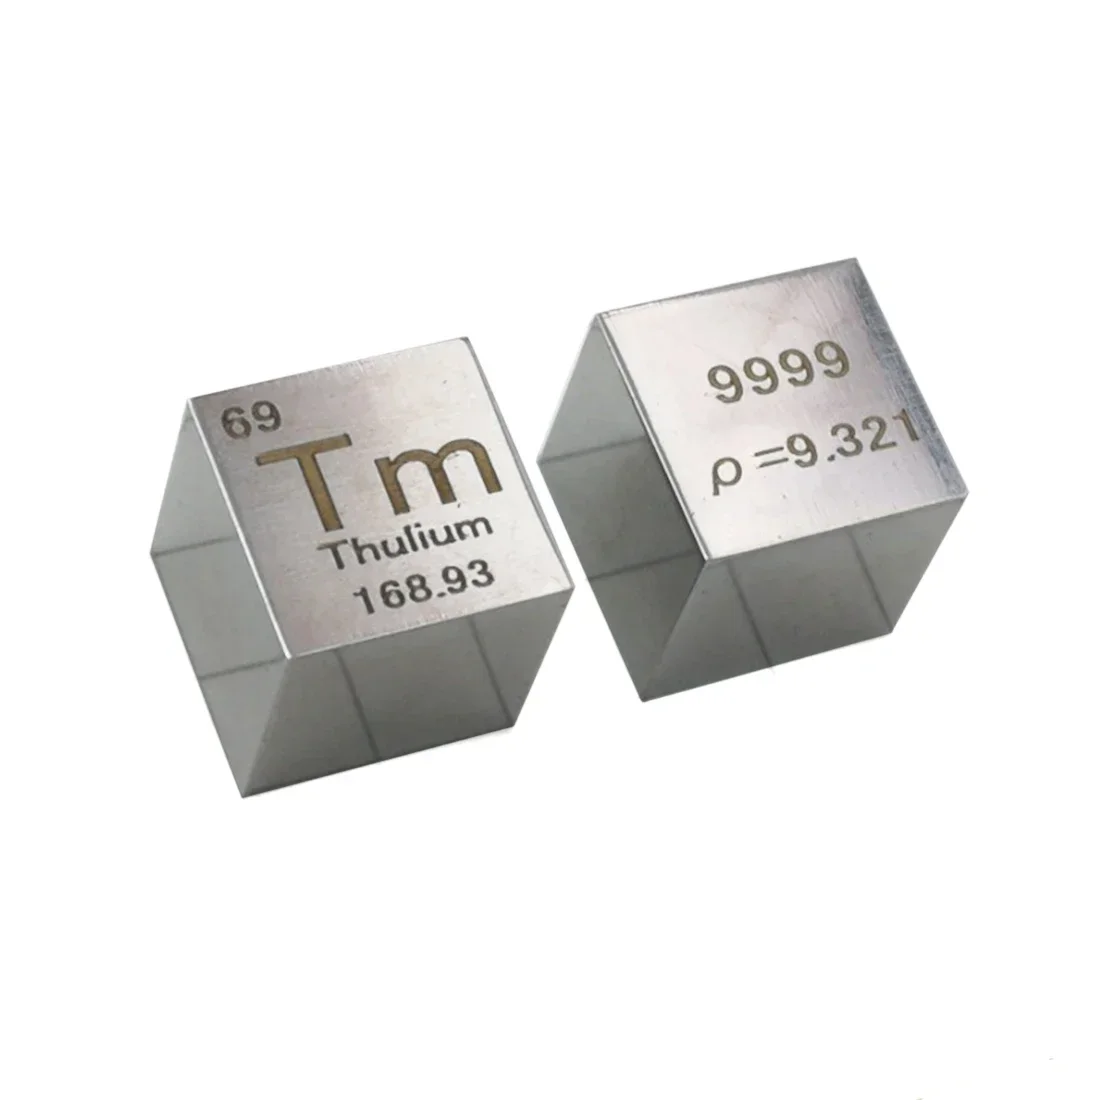 

Thulium (Tm) Metal MIRROR POLISHED 10mm Density Cube 99.99%